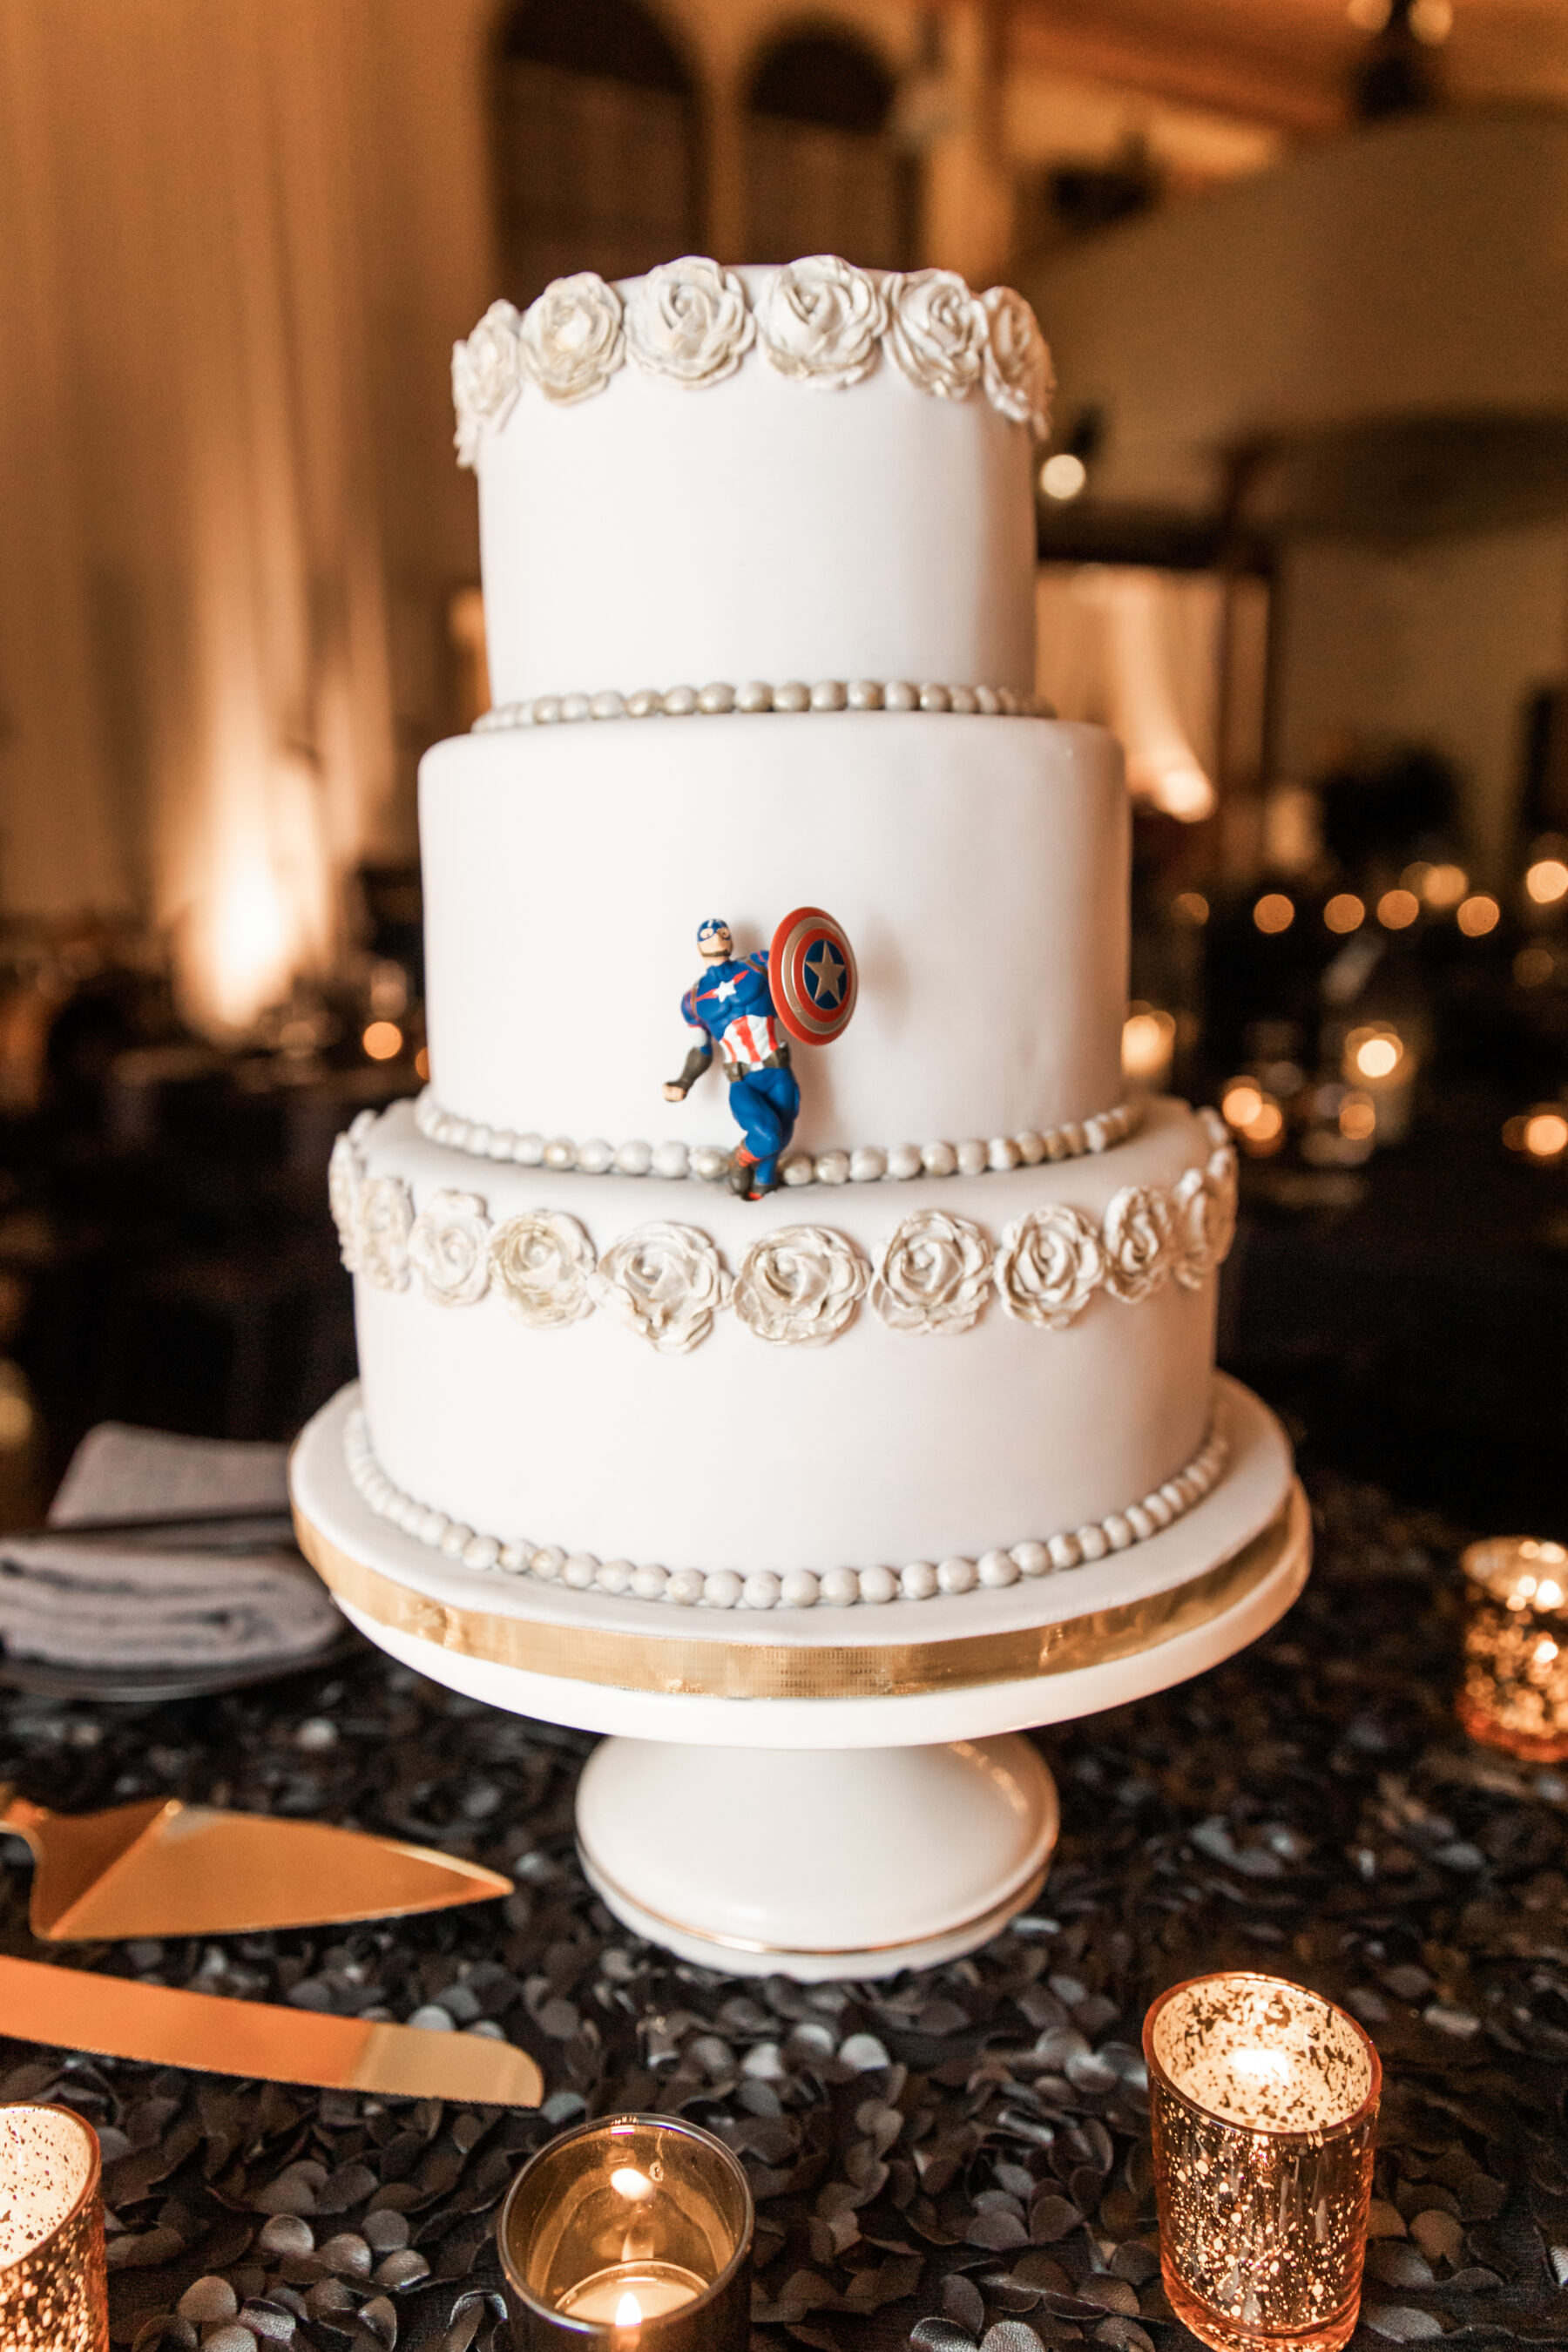 Winter wedding cake design: Nashville Wish Upon a Wedding captured by Nyk + Cali Photography featured on Nashville Bride Guide